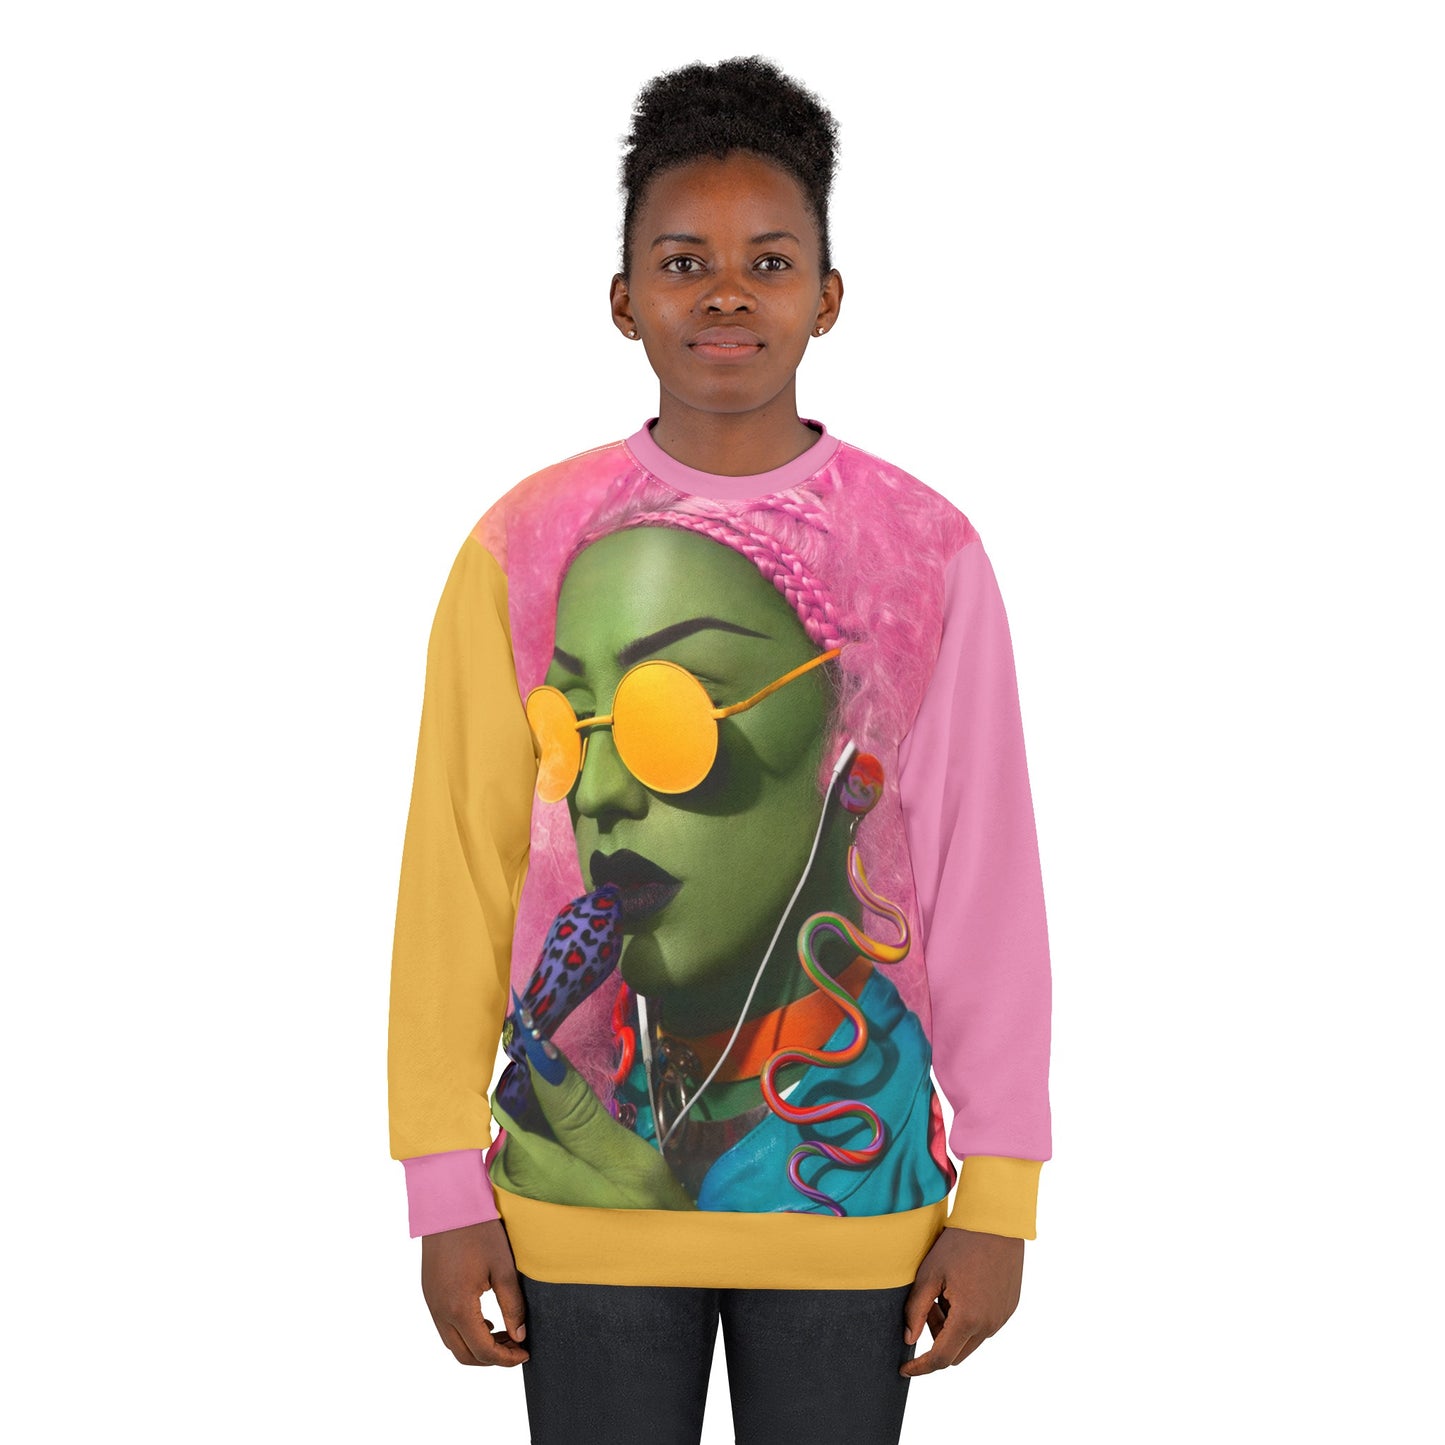 “Cotton Candy Kush Dream” Sweatshirt